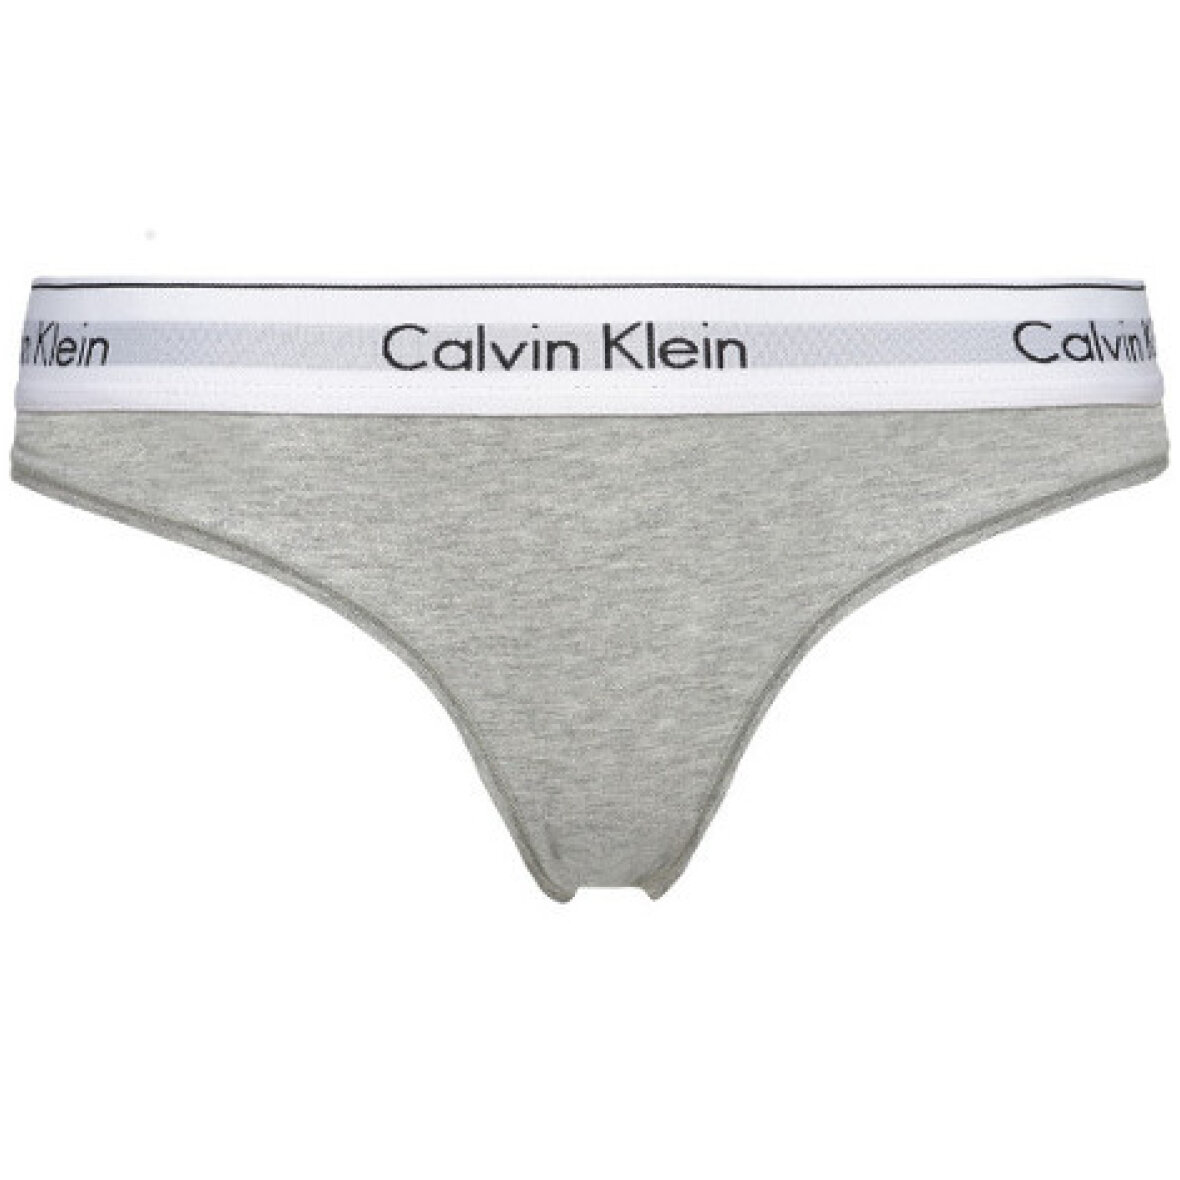 Calvin Klein Calvin underbukser - Shop nu